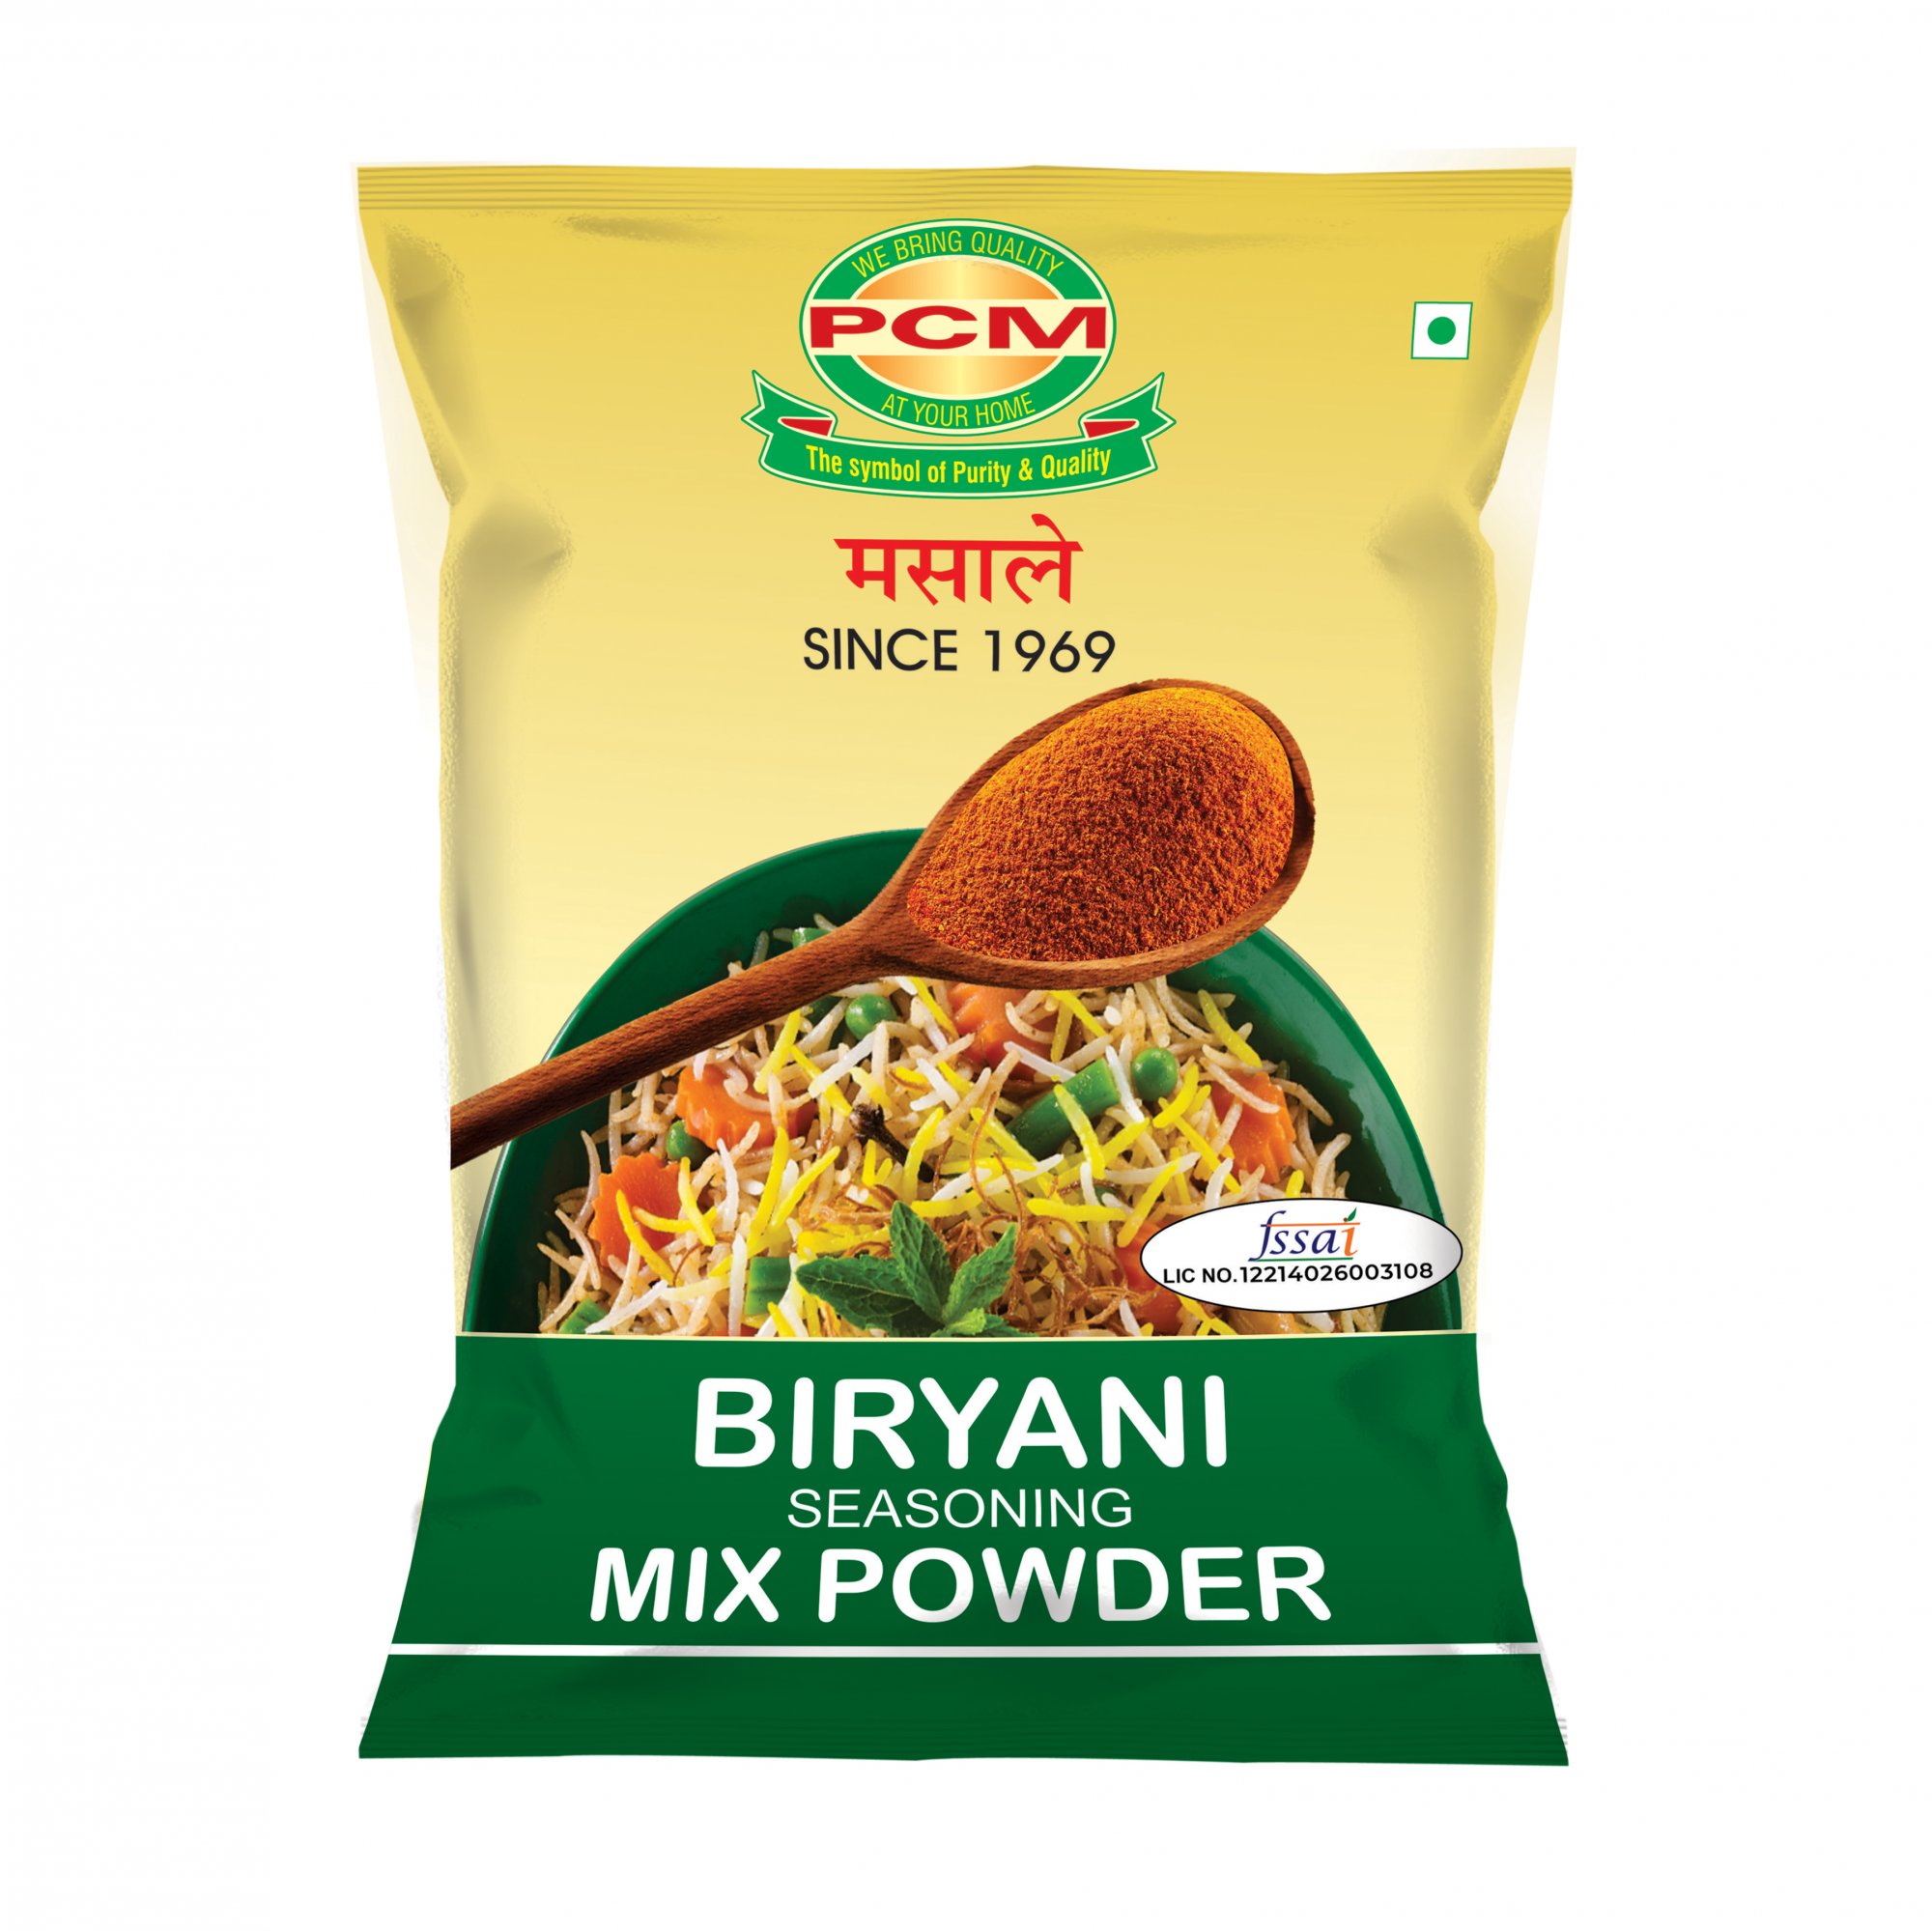 Biryani Seasoning Mix Powder